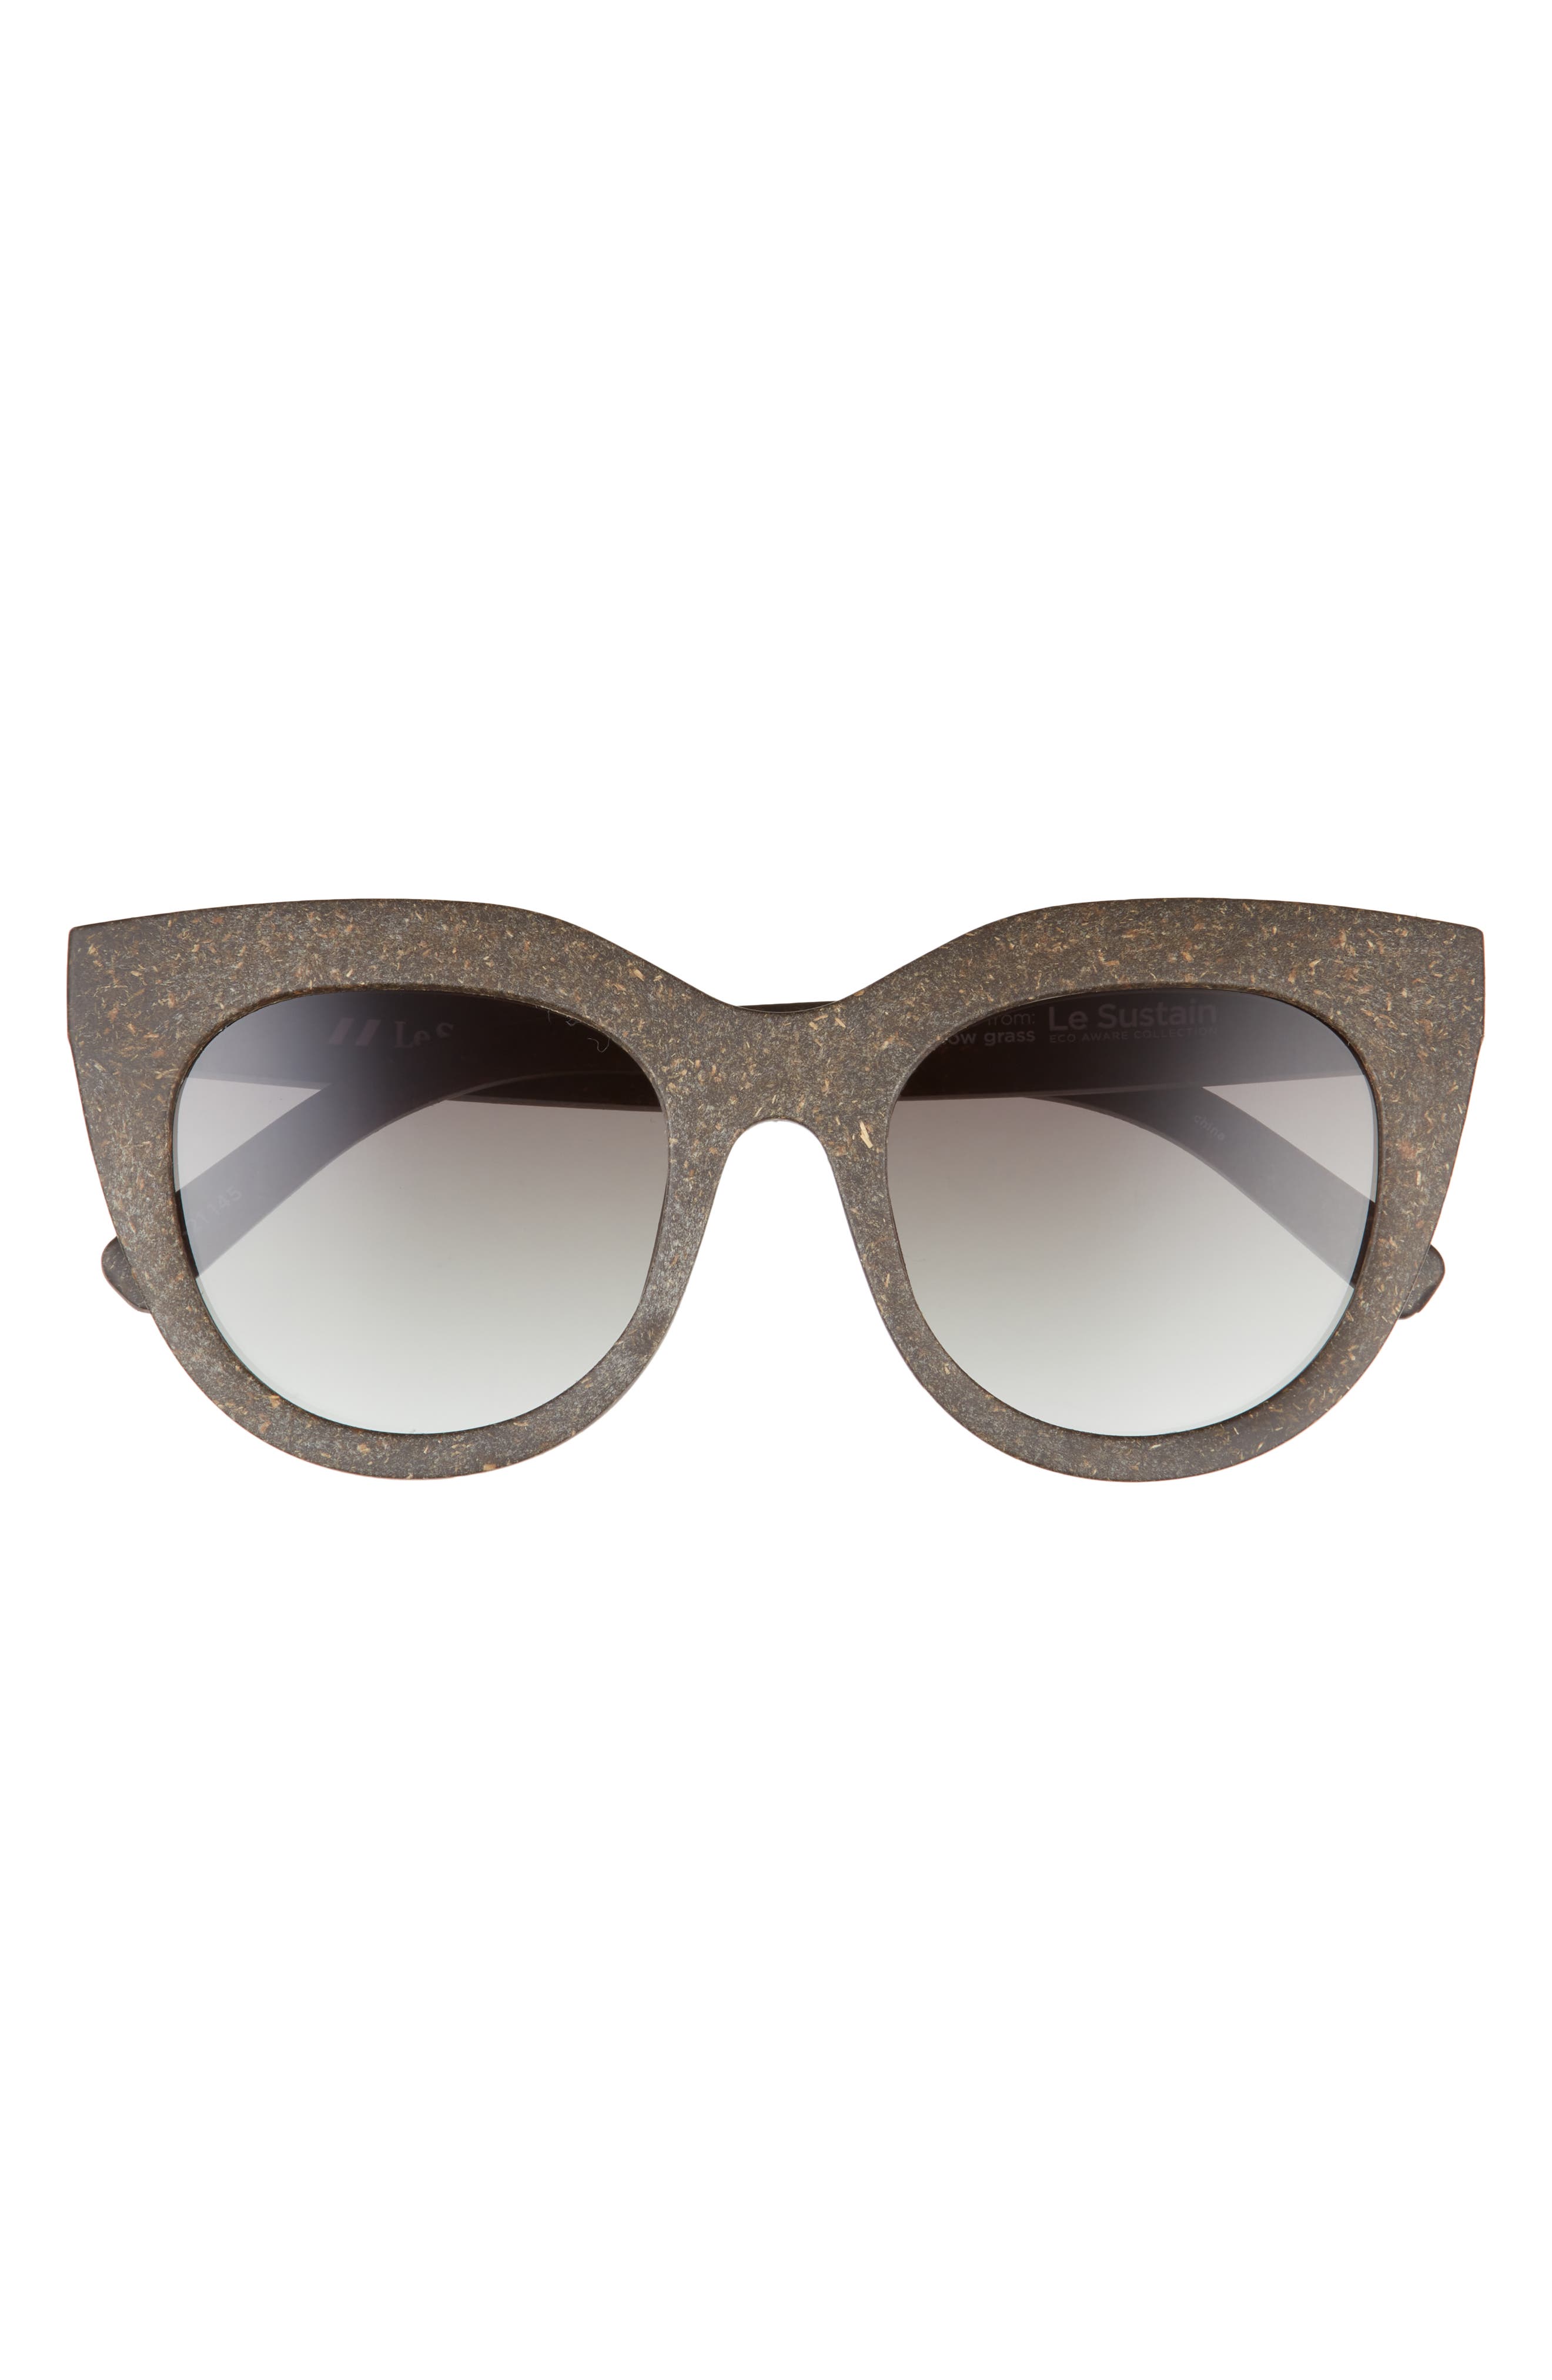 Le Specs Air Grass 52mm Cat Eye Sunglasses in Midnight Grass/Khaki Grad at Nordstrom